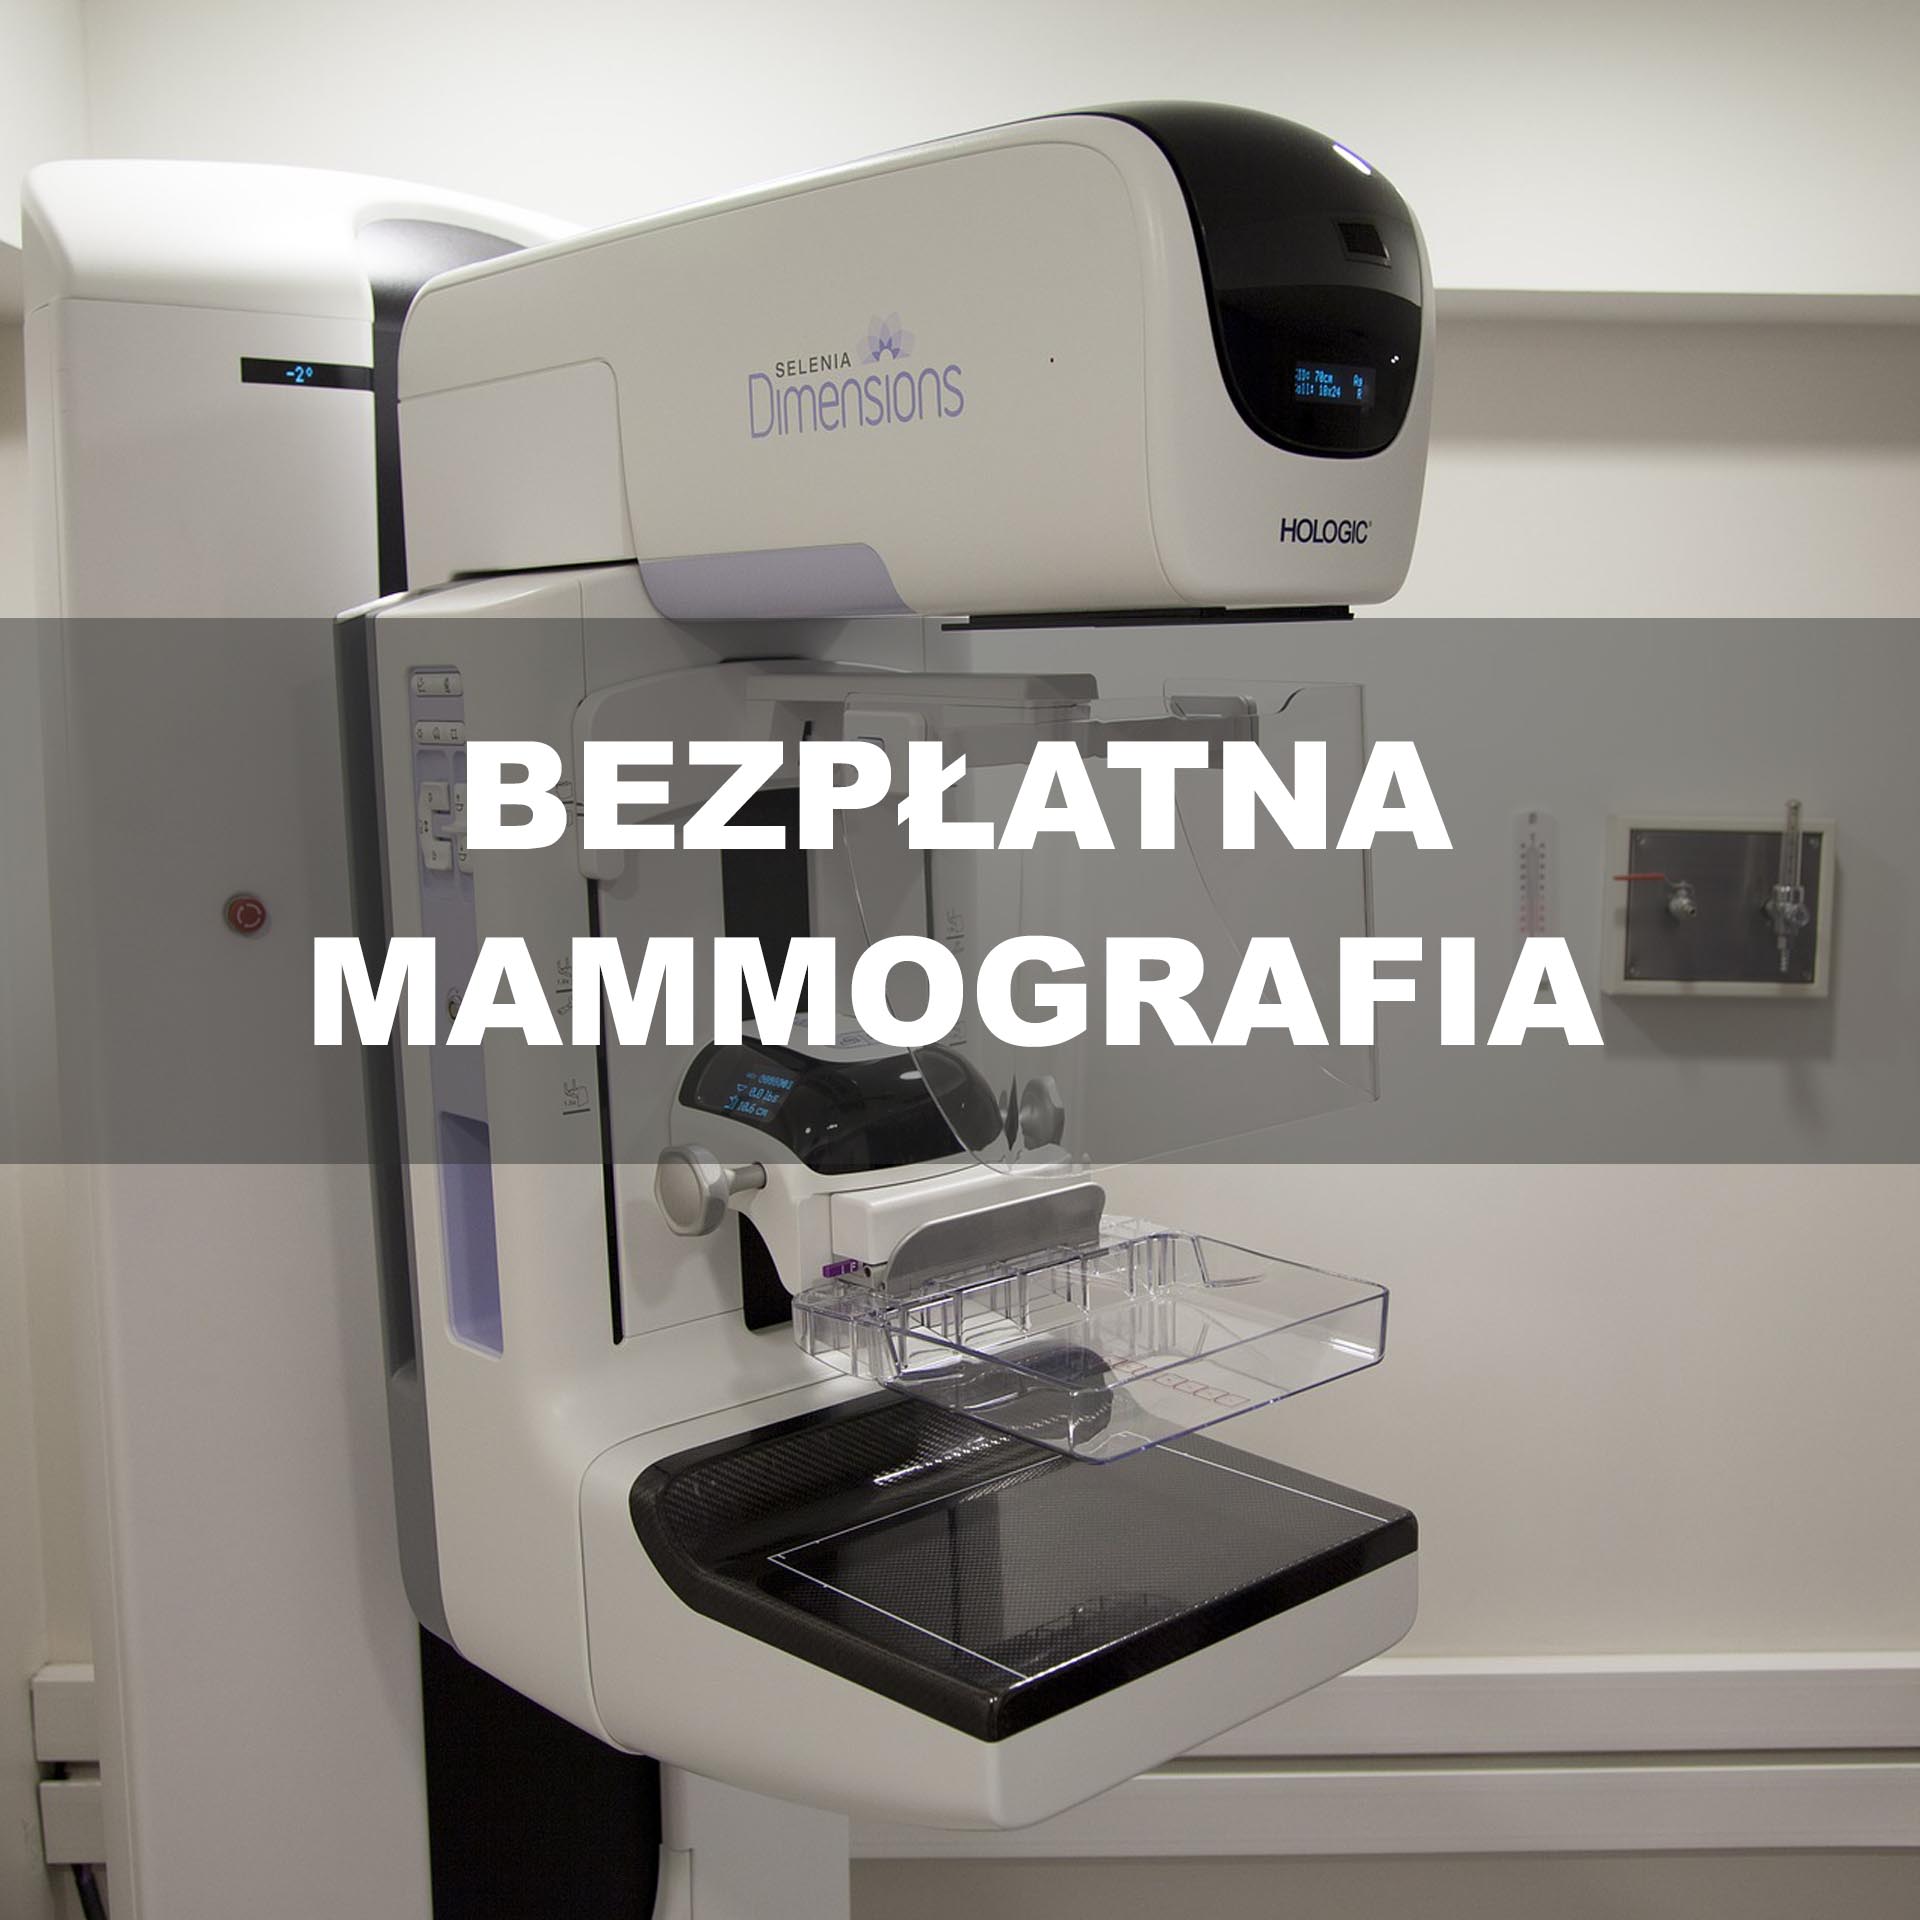 Bezpłatna mammografia - napis